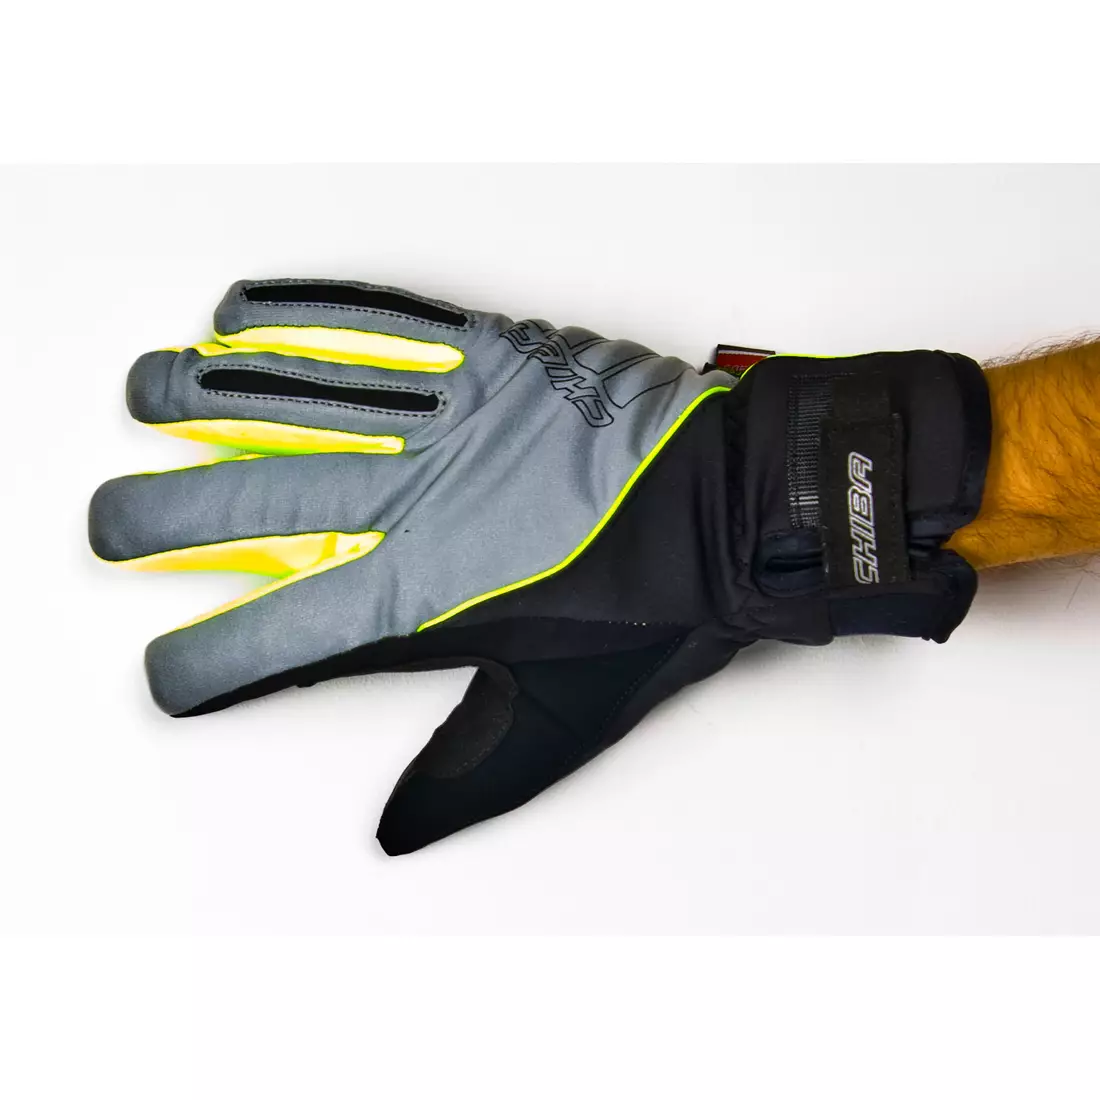 CHIBA REFLEX PRO winter cycling gloves, silver-fluorine 31186